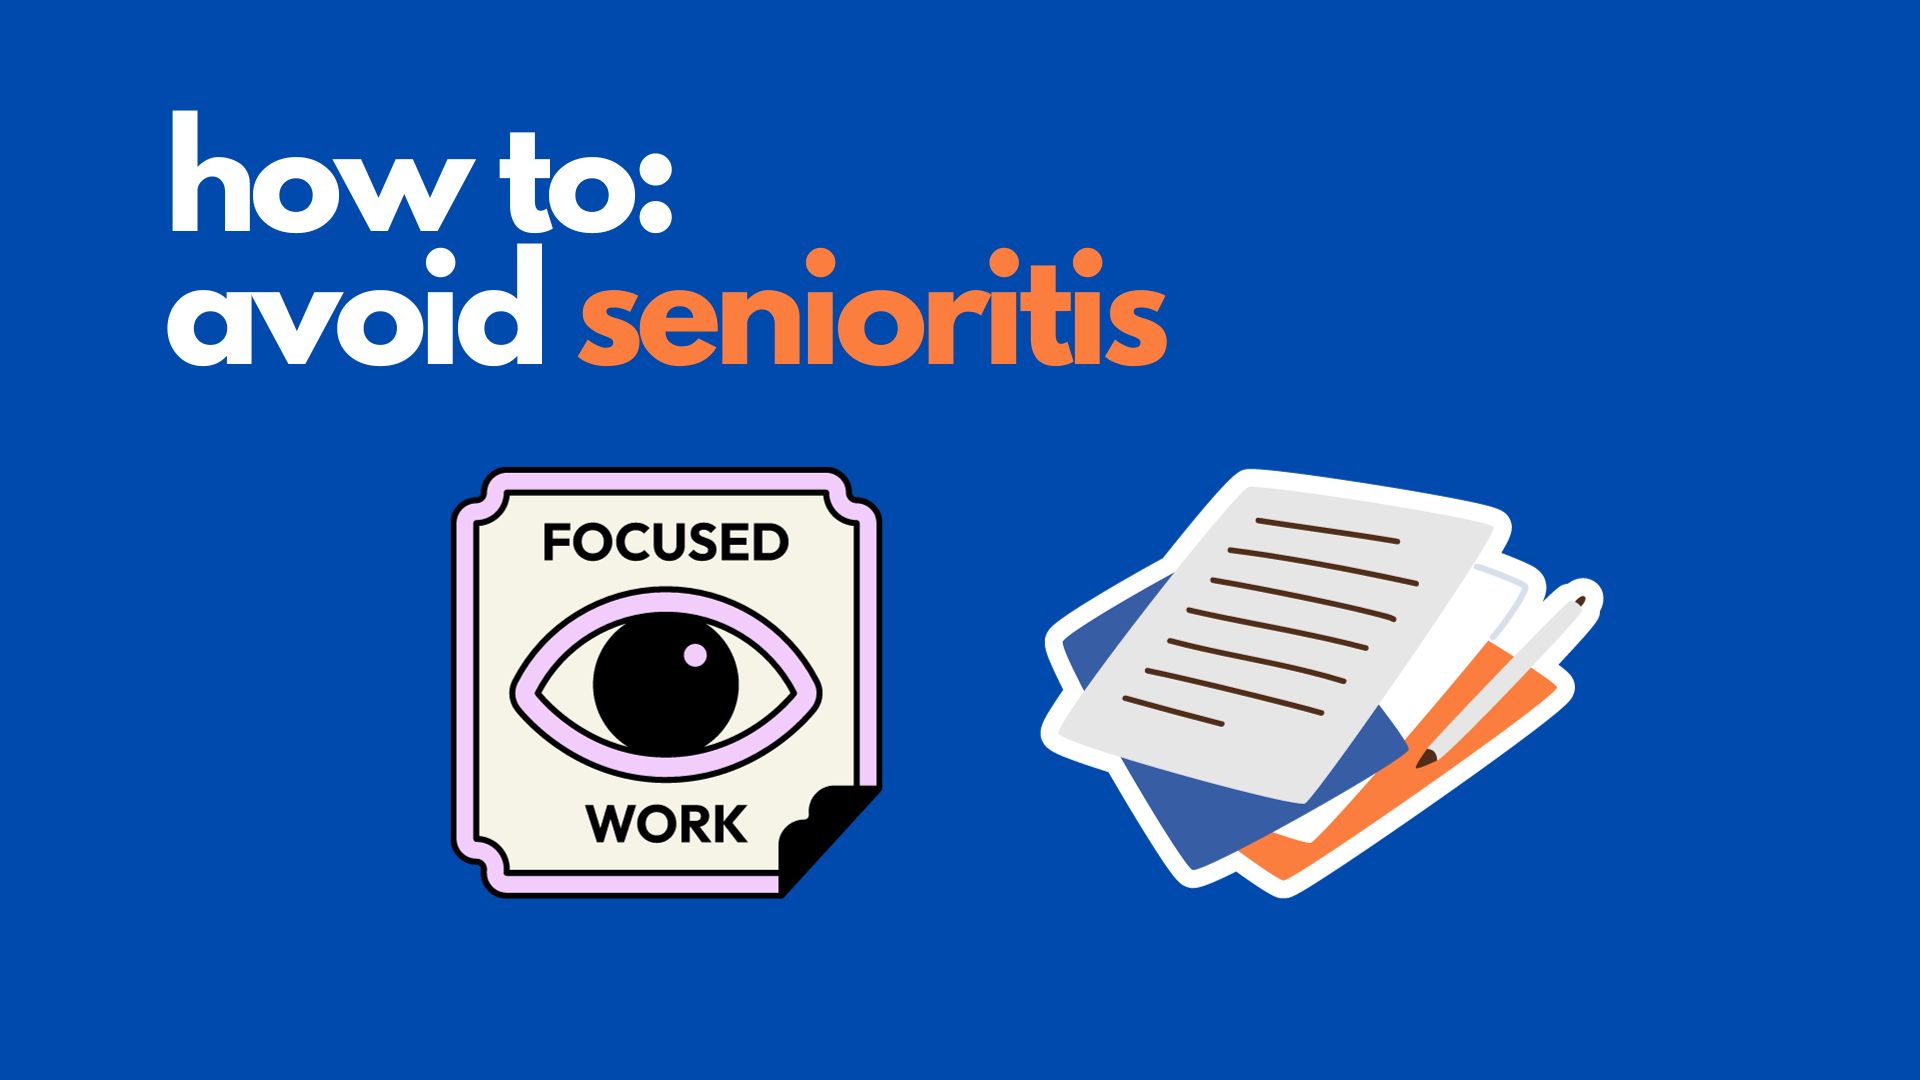 A guide to avoiding senioritis